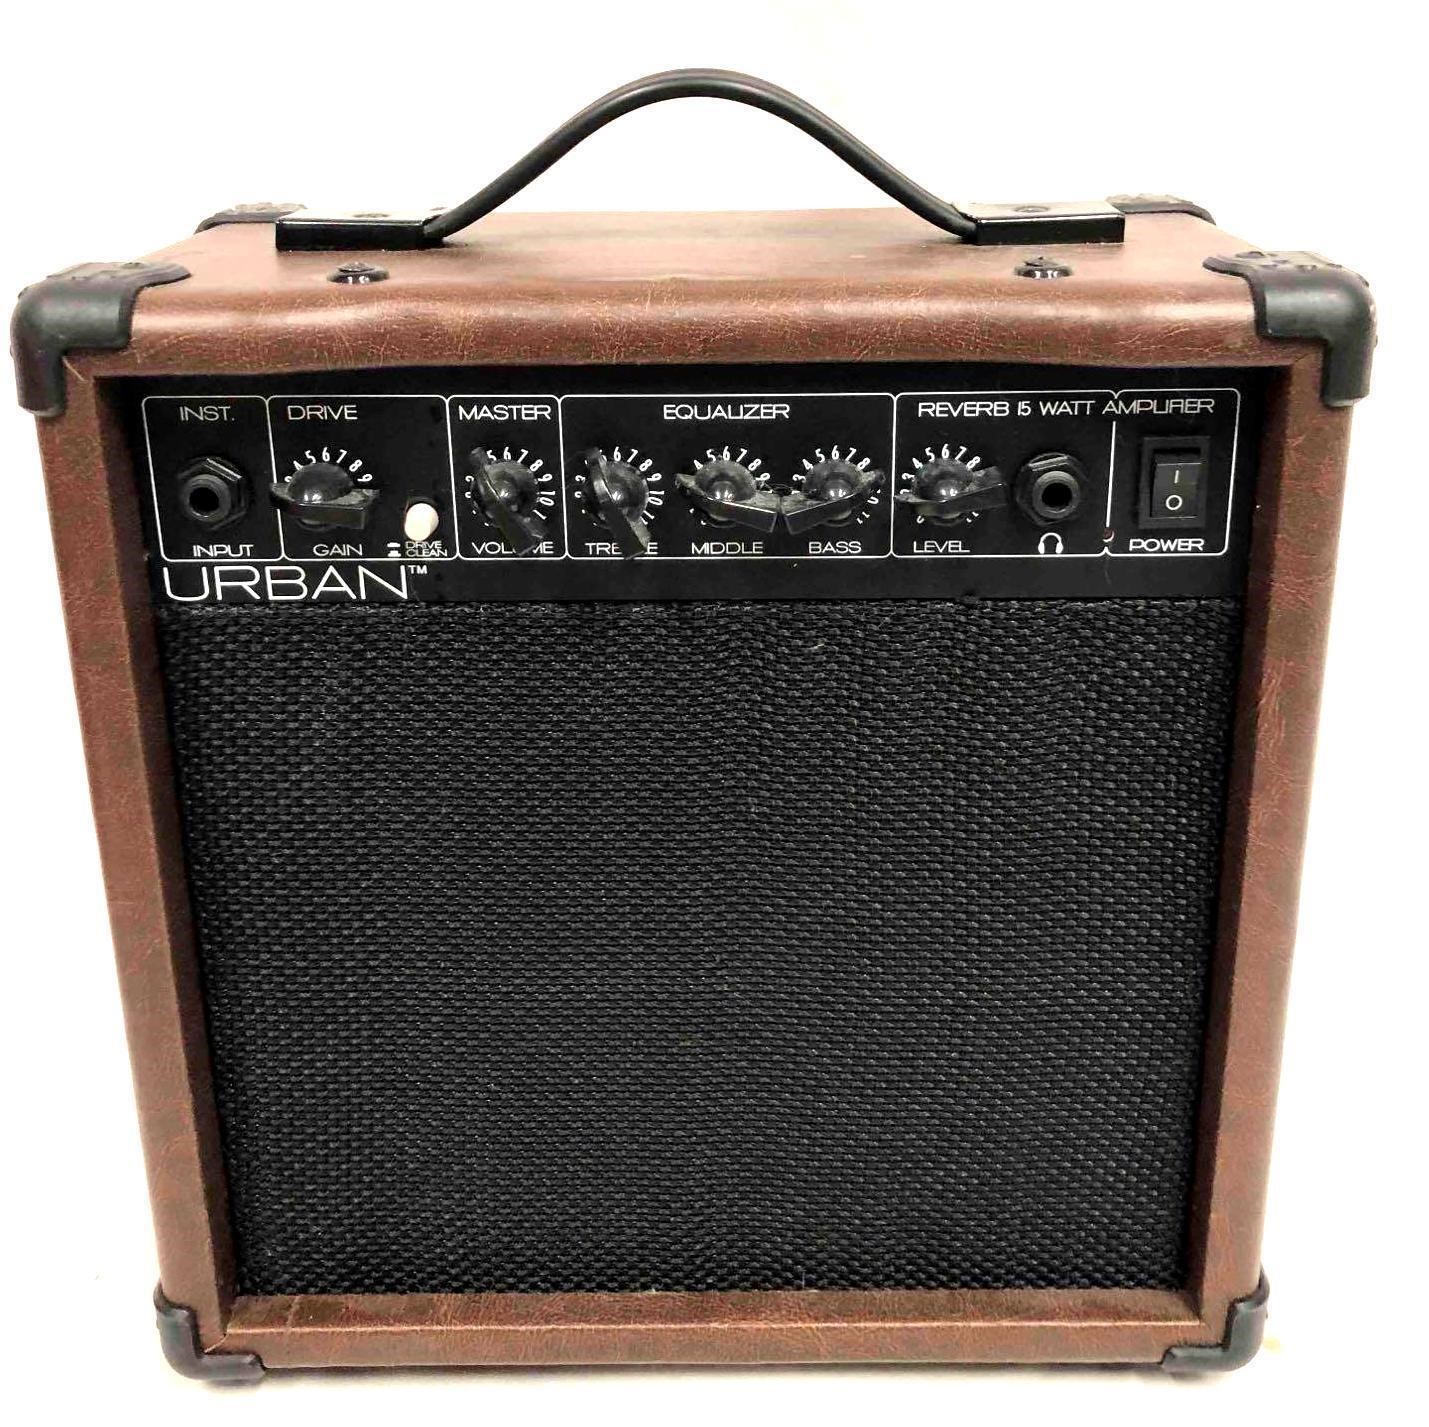 Keith Urban 15 Watt Guitar Amplifier